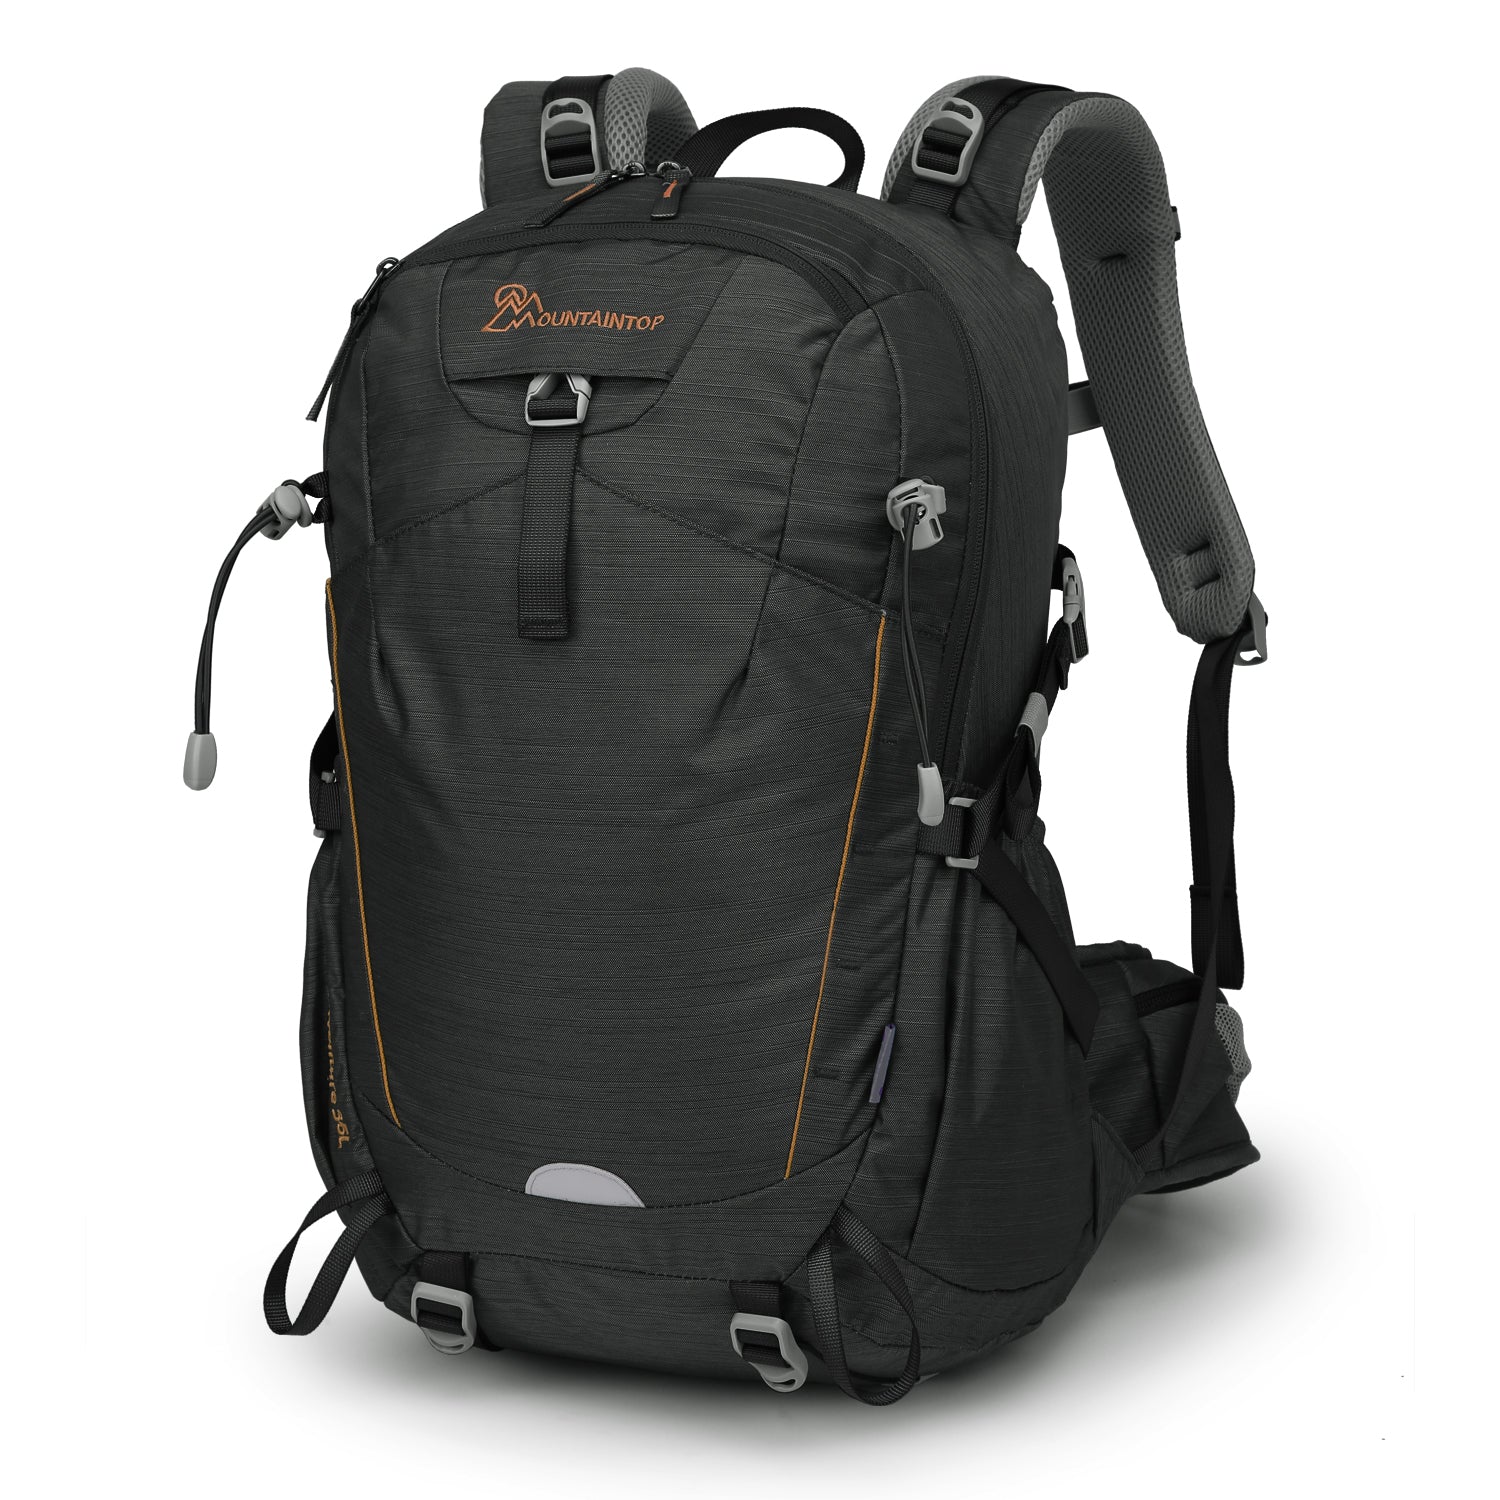 backpacking rucksack,Backpack for Men Women,camping backpack,